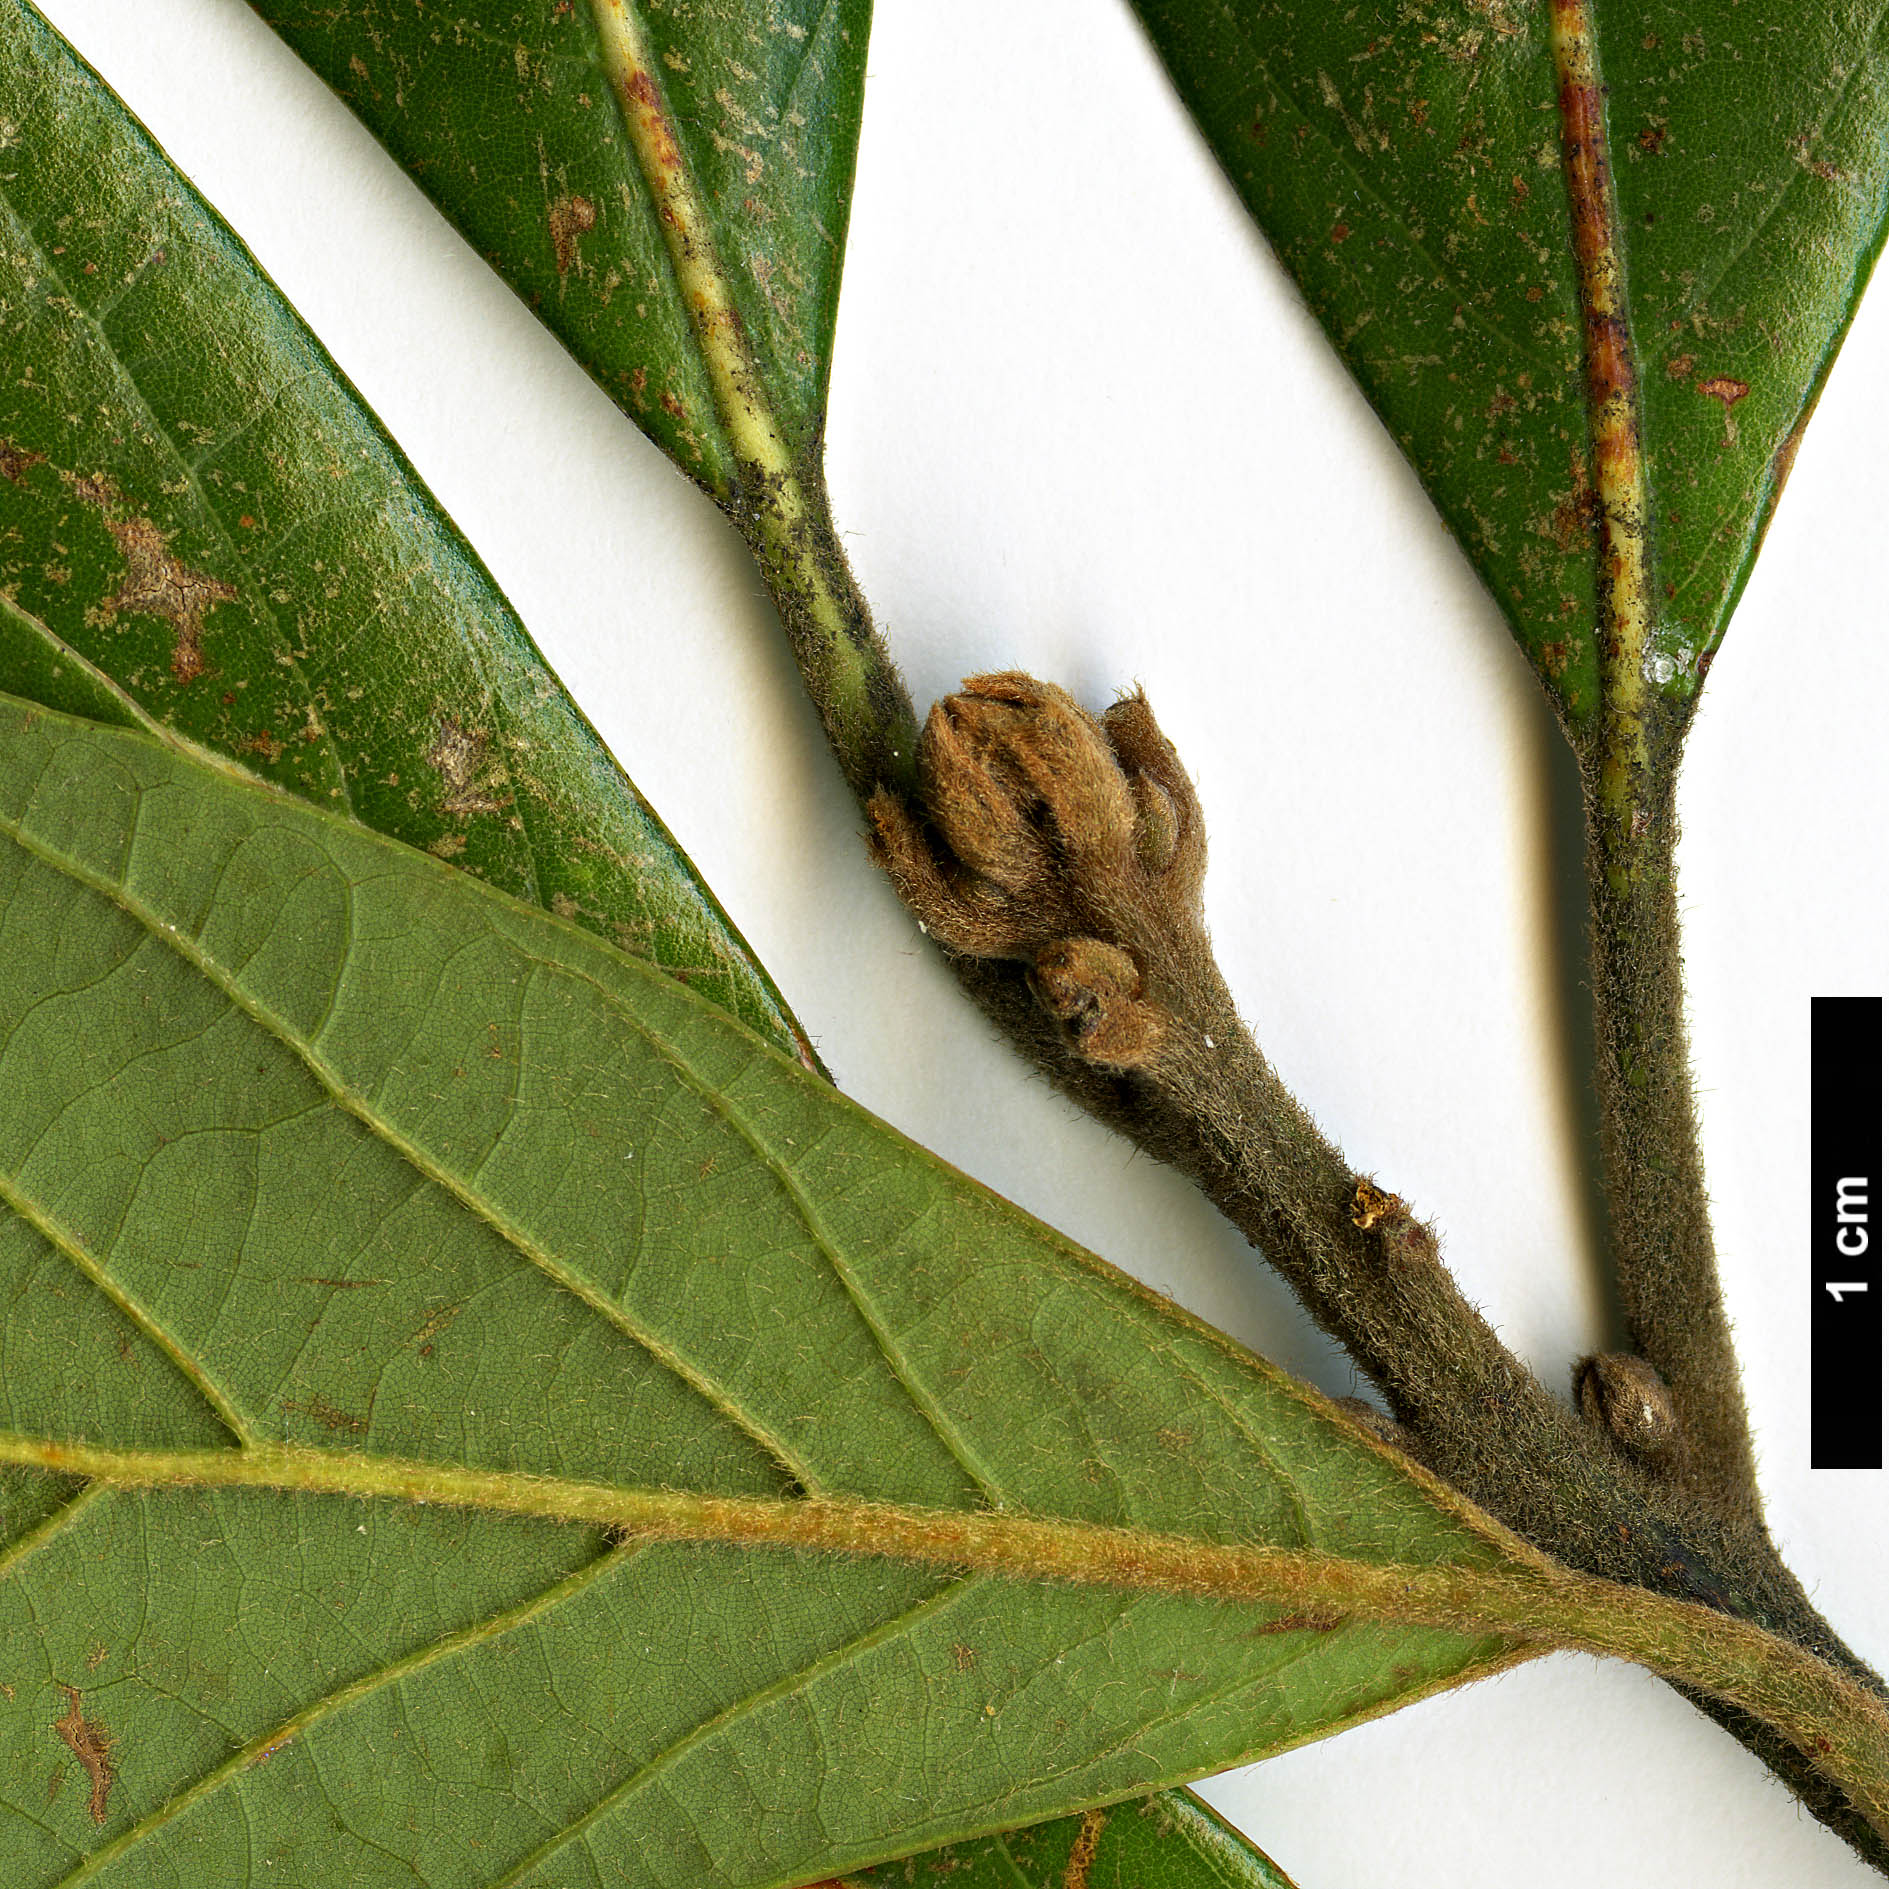 High resolution image: Family: Lauraceae - Genus: Persea - Taxon: borbonia